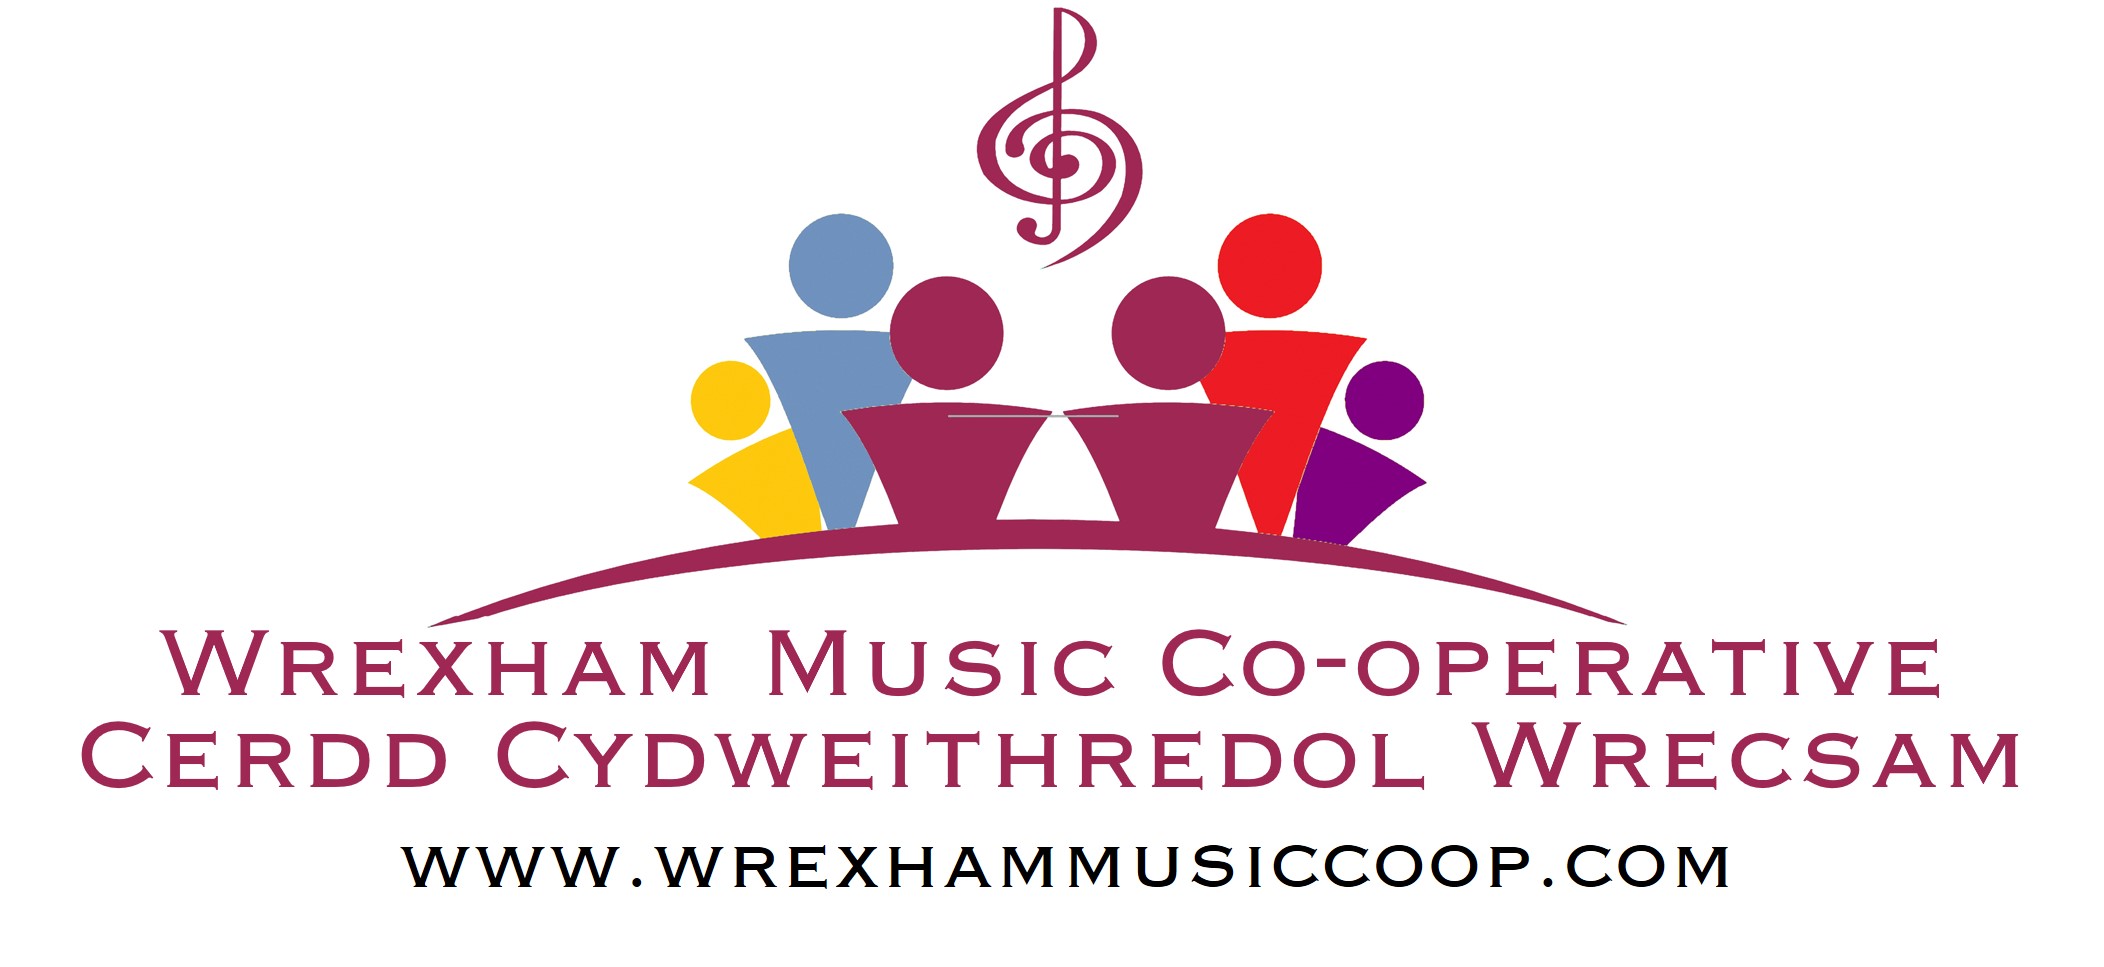 Wrexham Music Co-operative logo